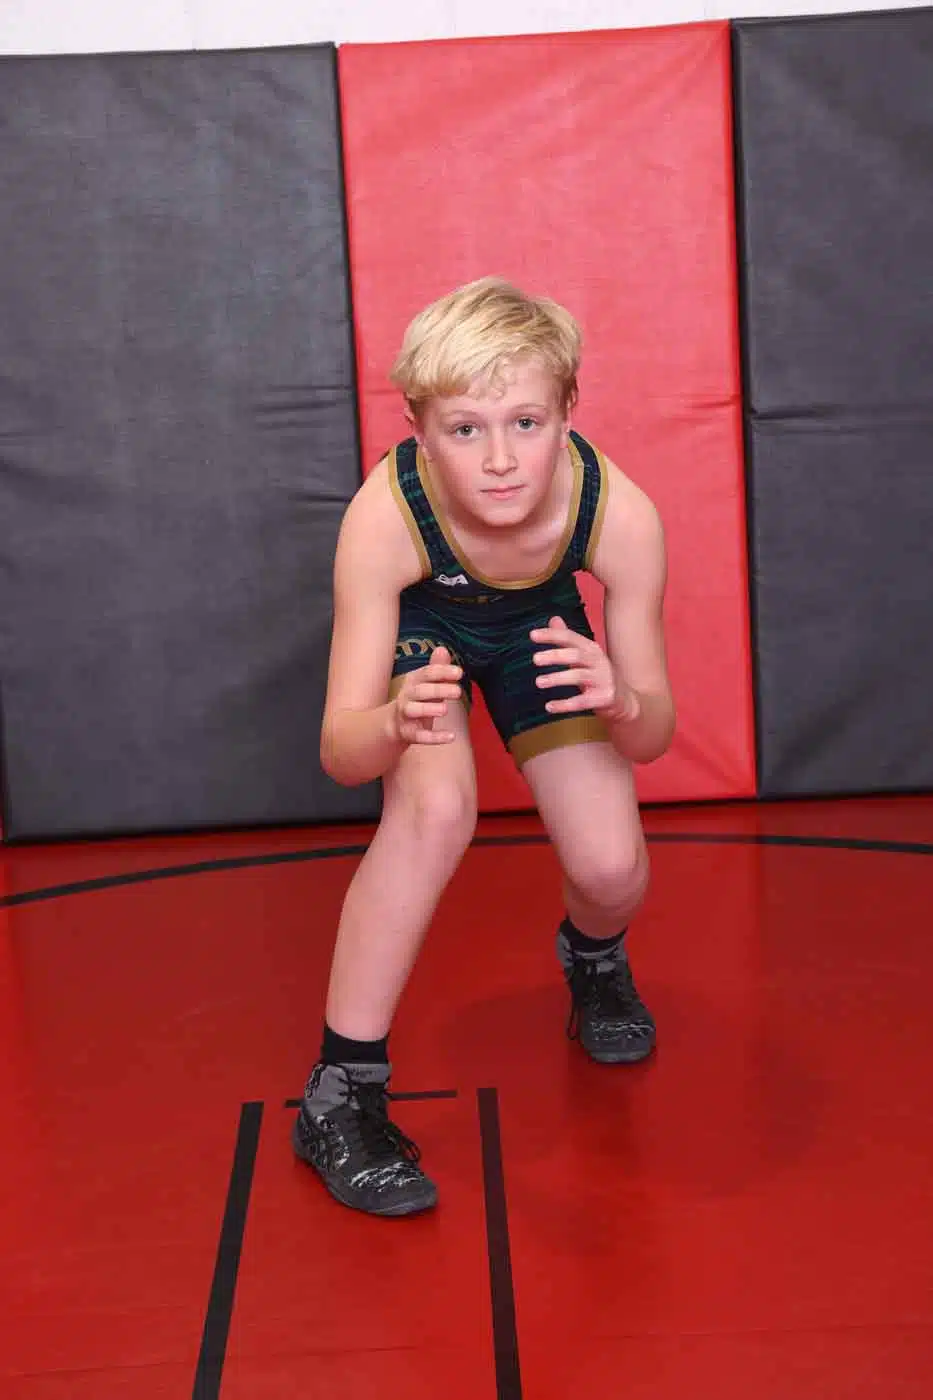 boy wrestler posing